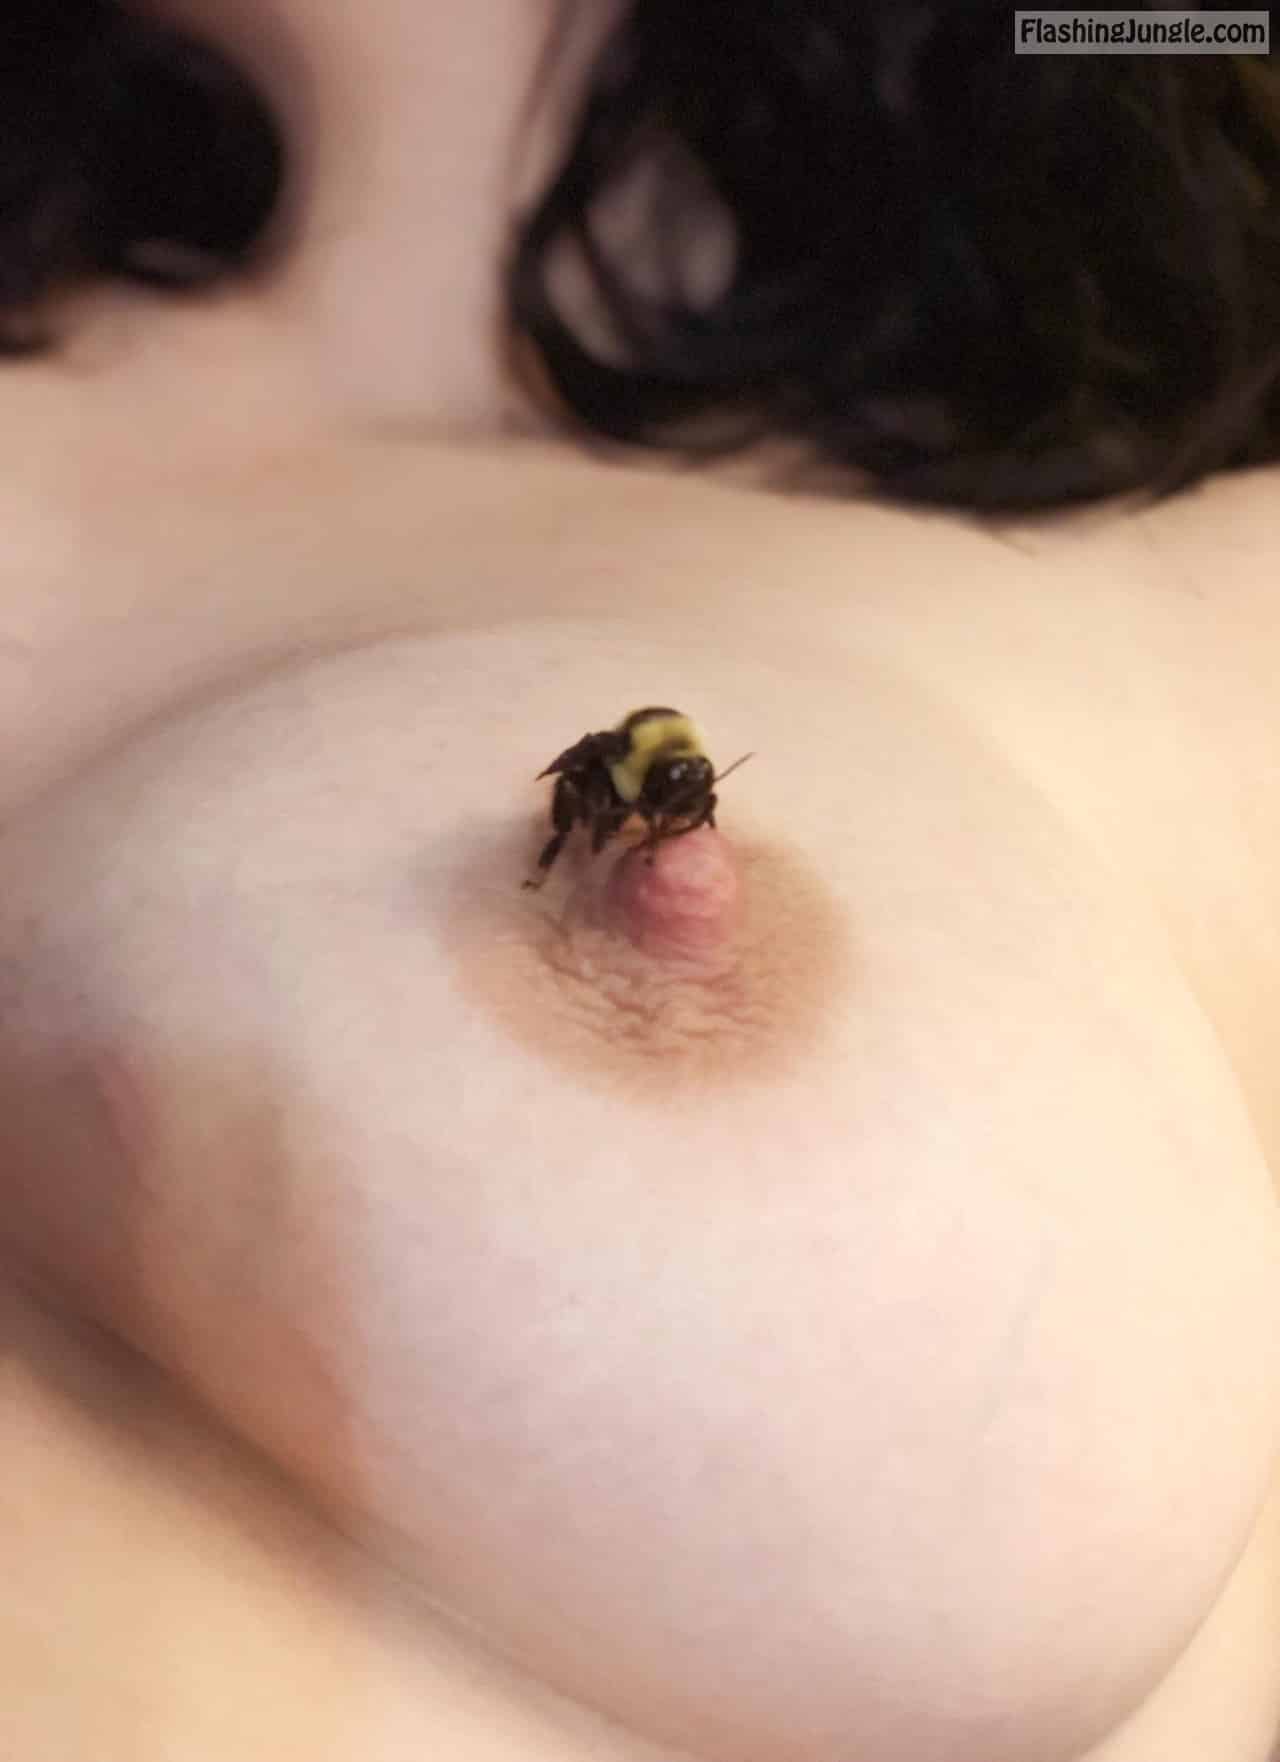 laci kay somers nipples images - Bee on nipple - Public Flashing Pics